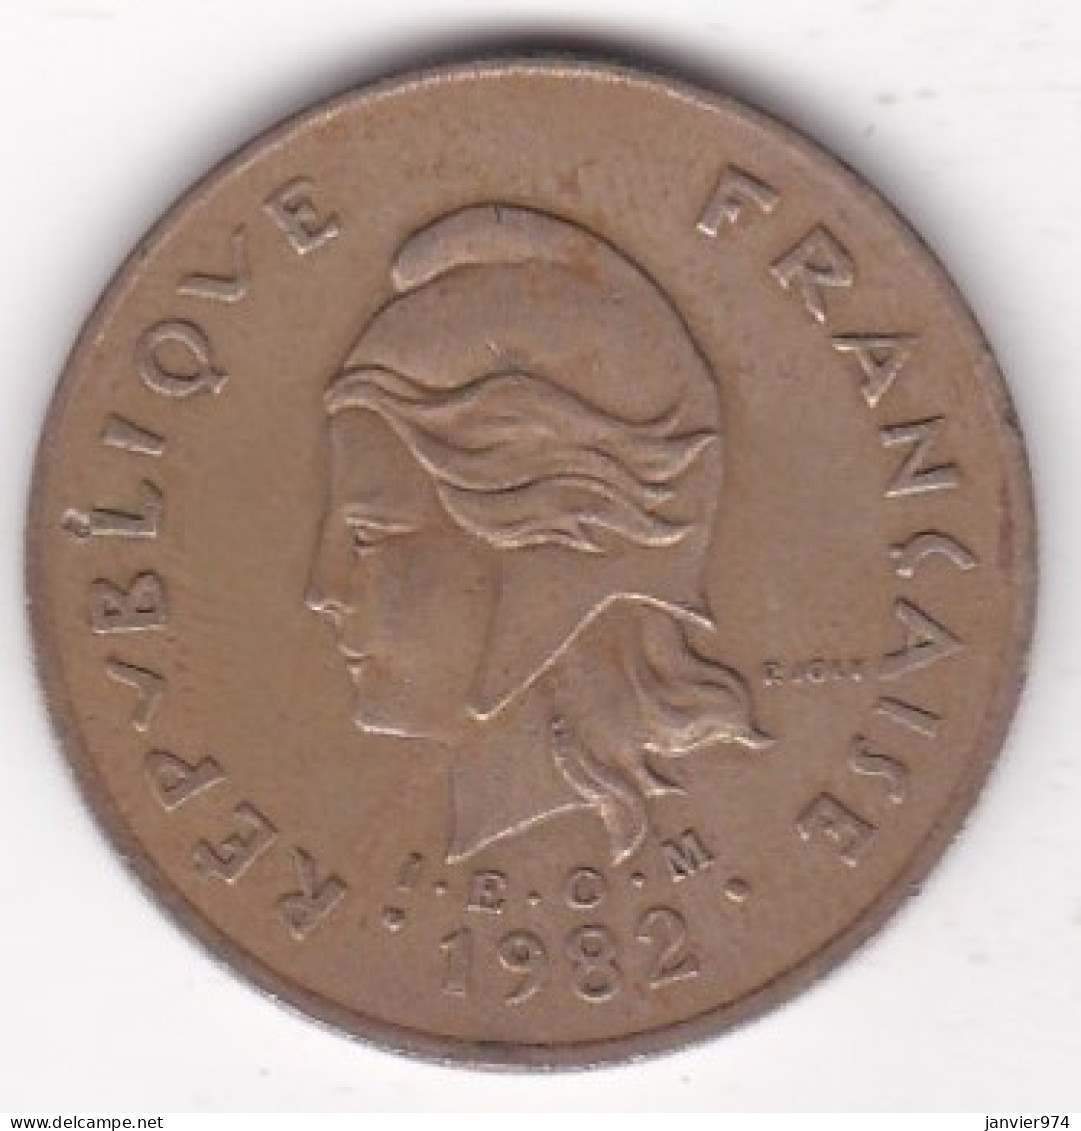 Polynésie Française . 100 Francs 1982 , Cupro-nickel-aluminium, Lec# 128 - Französisch-Polynesien